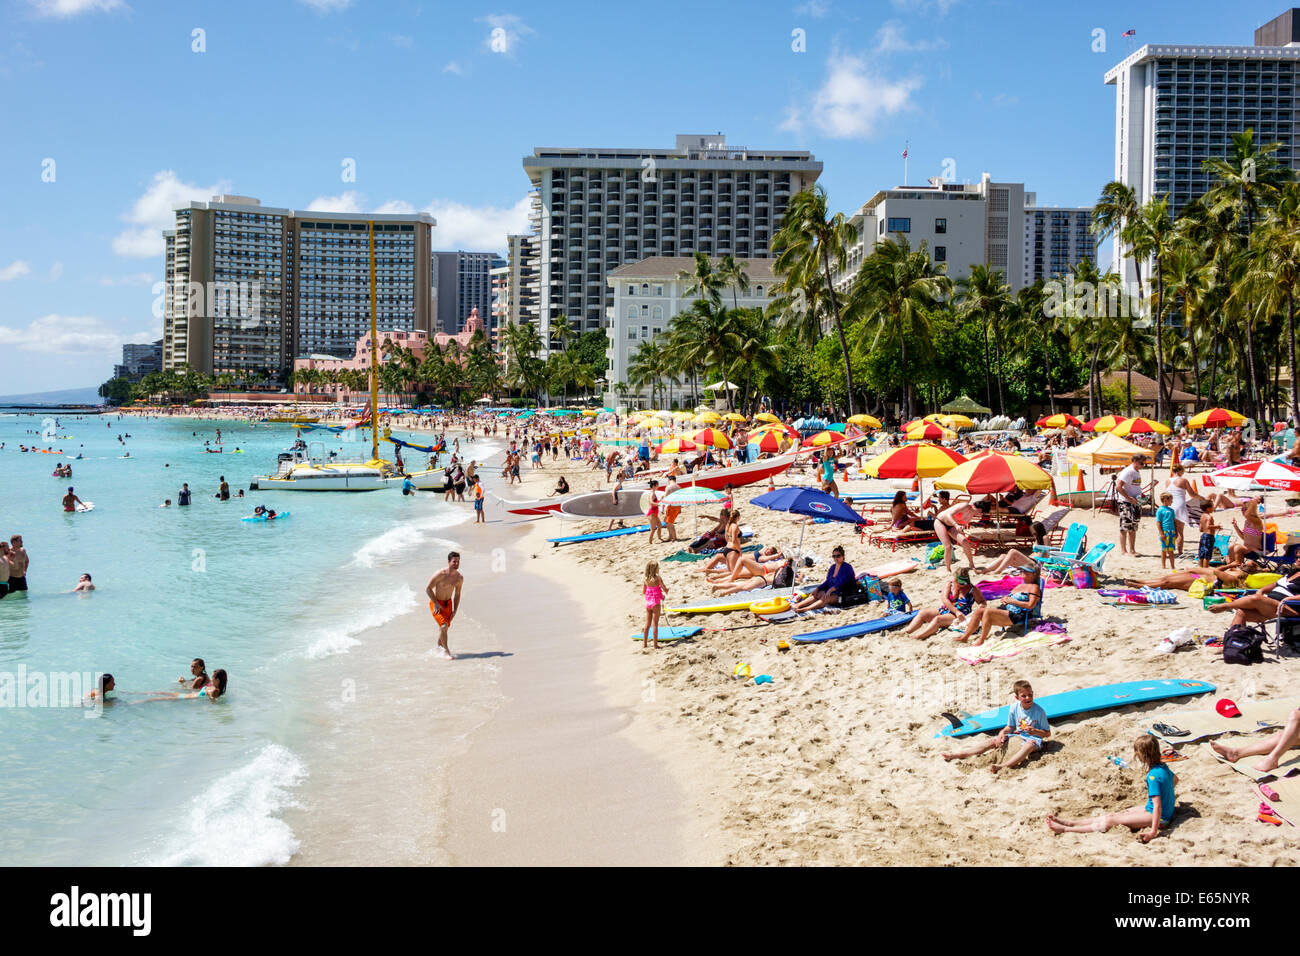 Honolulu Hawaii,Oahu,Hawaiian,Waikiki Beach,resort,Kuhio Beach State Park,Pacific Ocean,sunbathers,umbrellas,families,crowded,Sheraton Waikiki,hotel,O Stock Photo